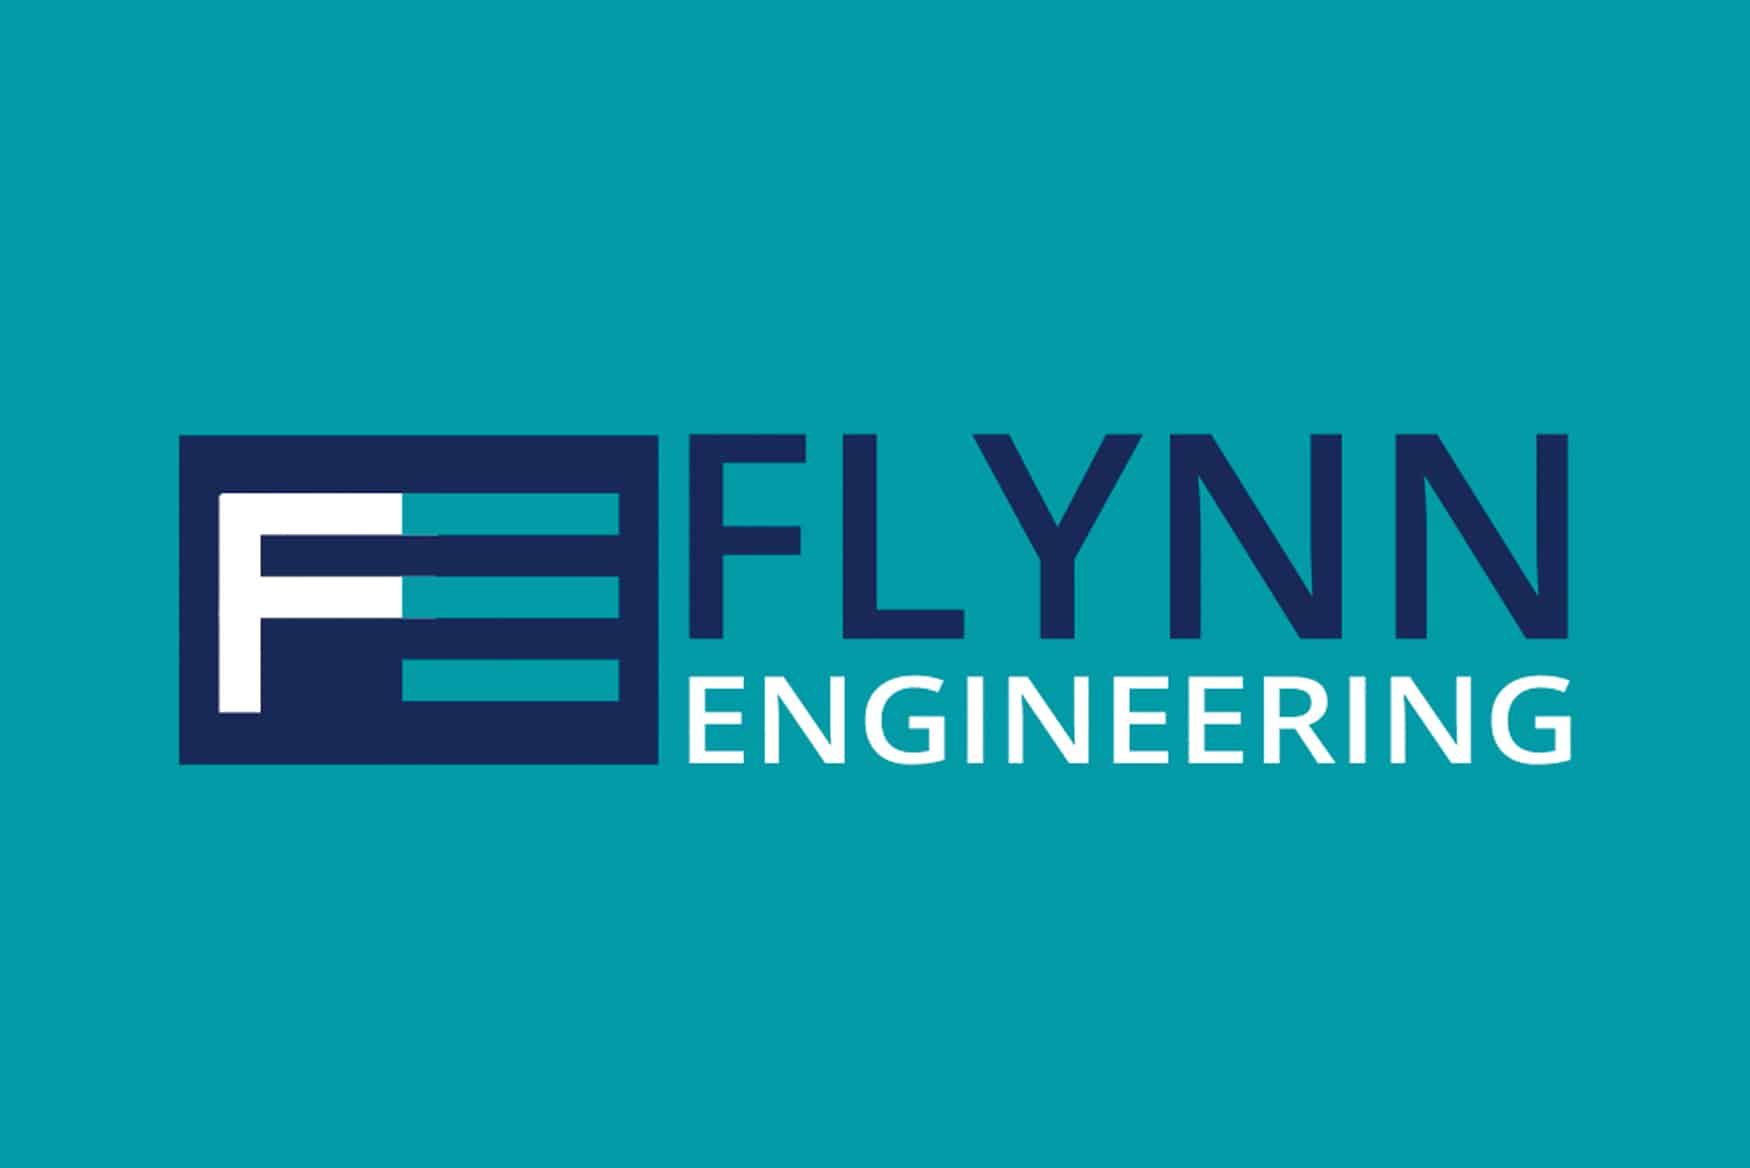 Flynn Engineering Logo and Branding